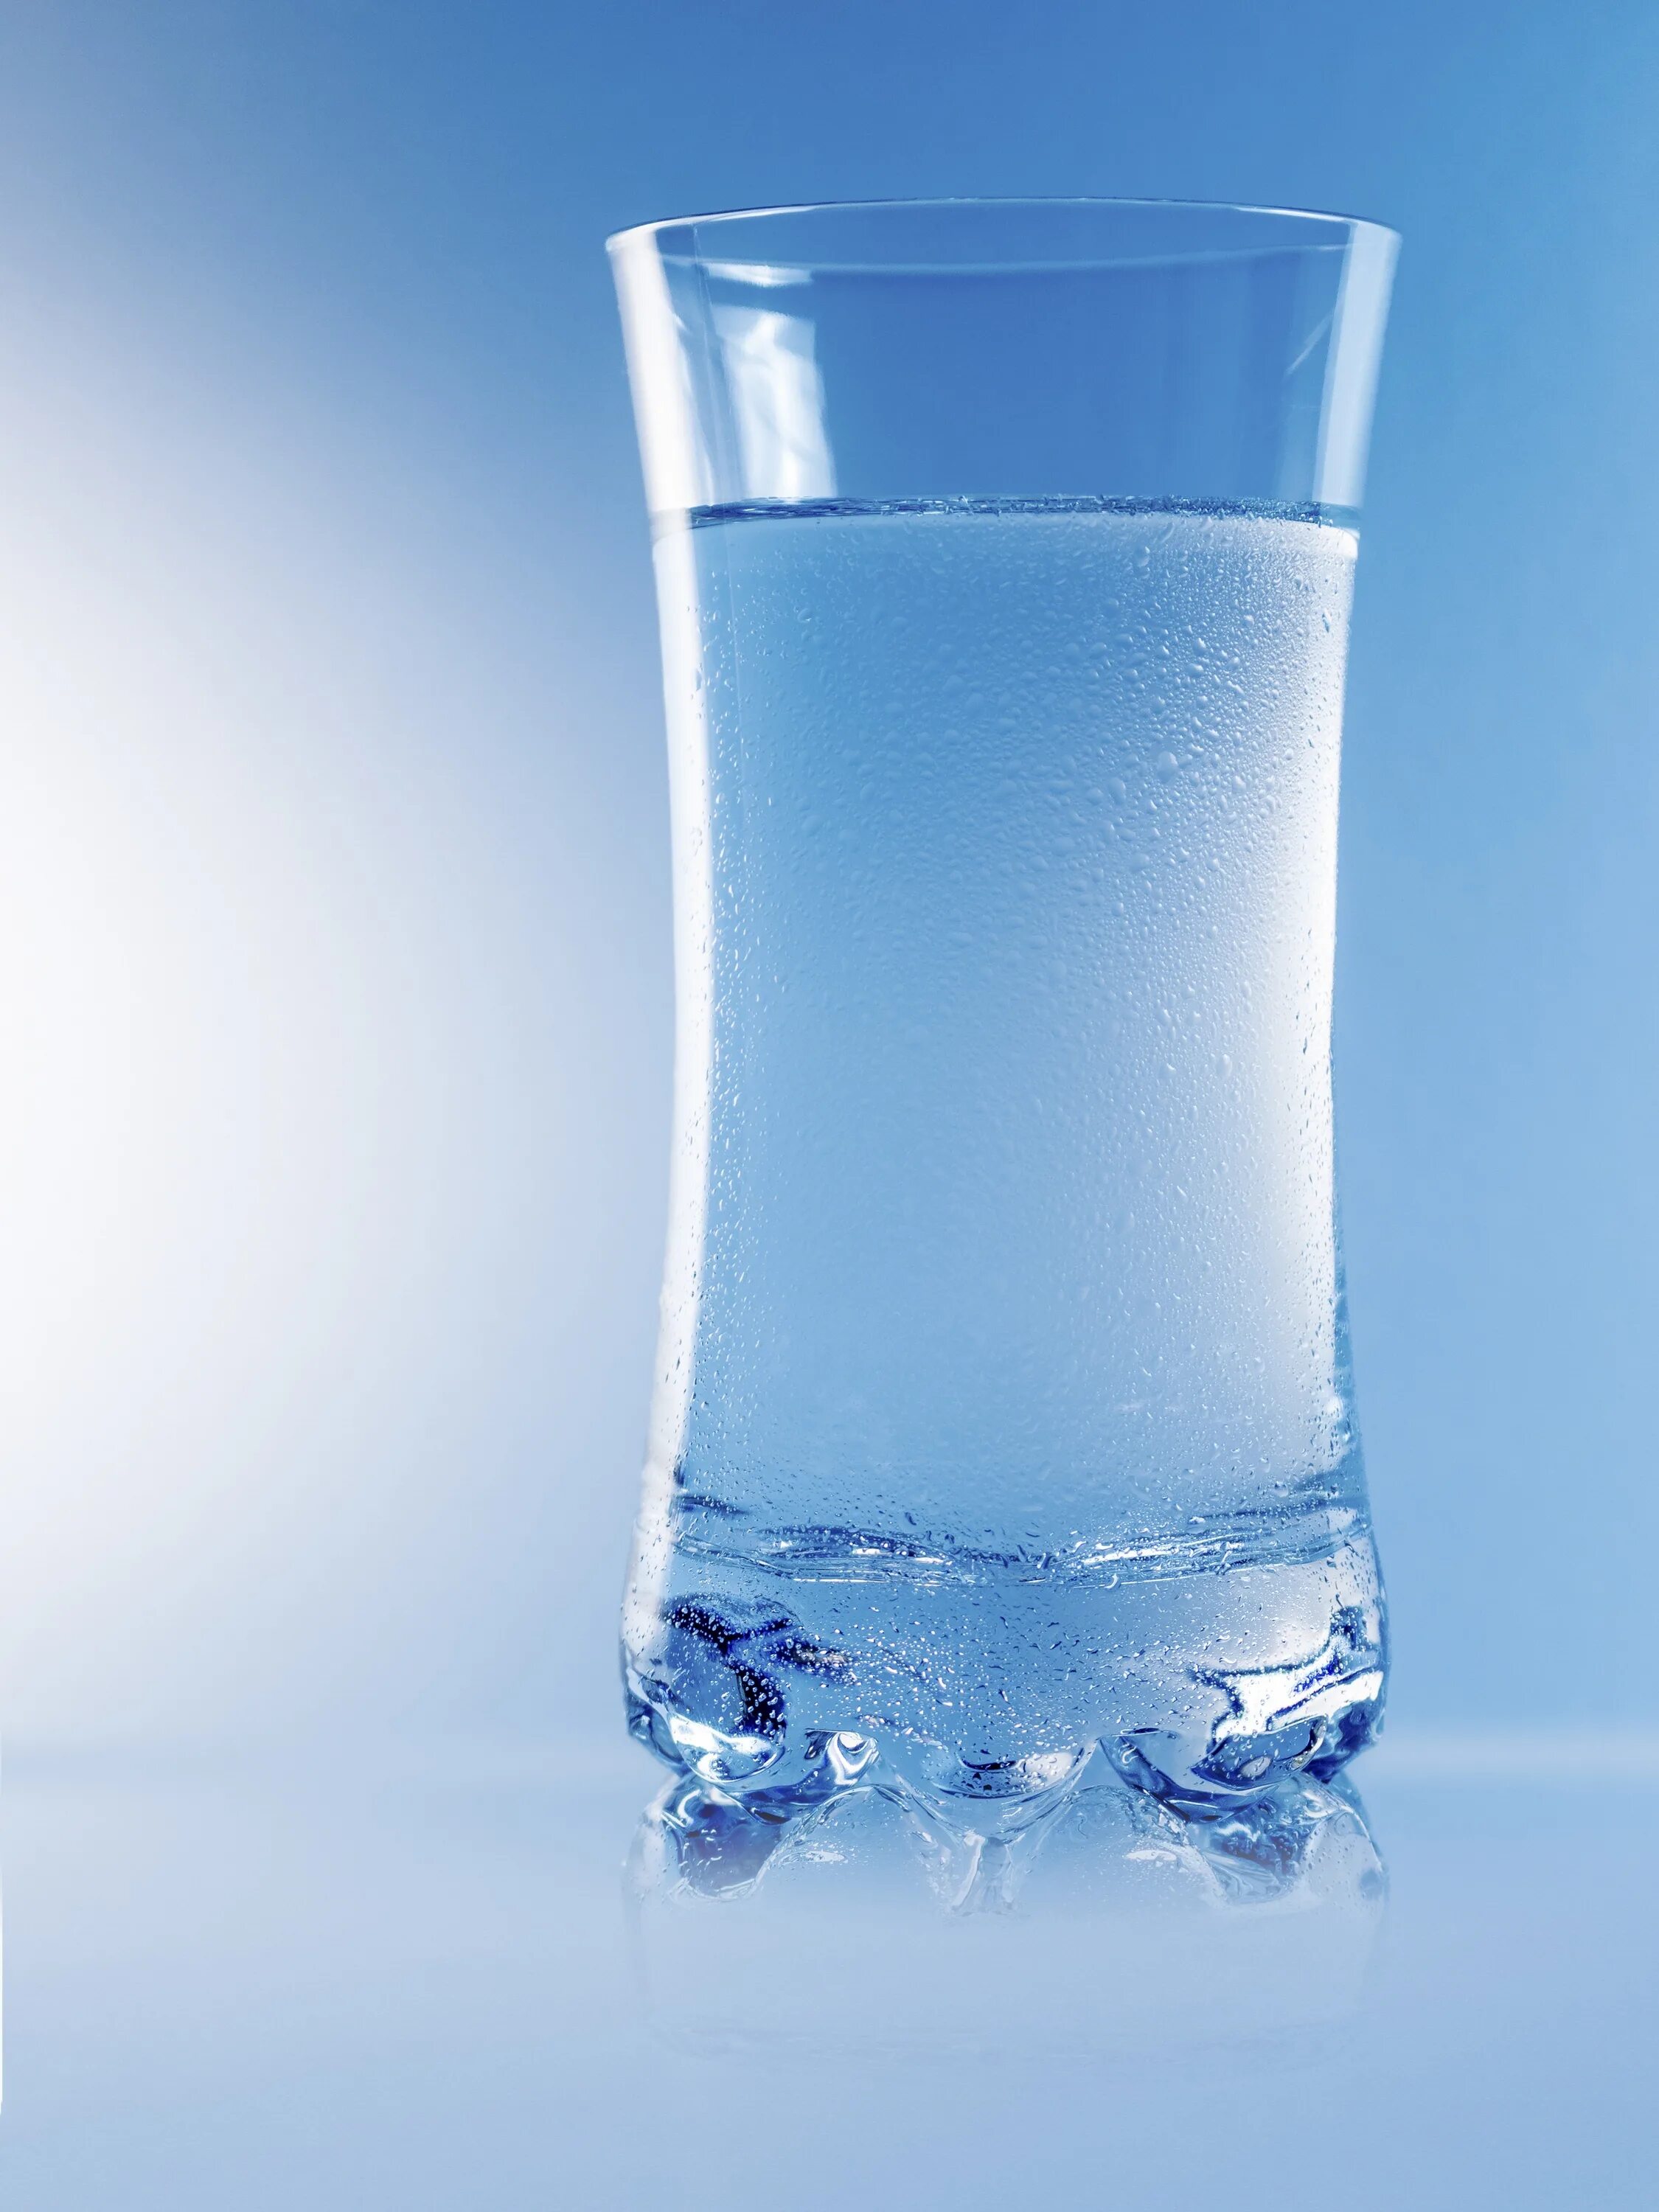 Стакан воды 5 букв. Стакан воды. Чистая вода. Стакан чистой воды. Красивые стаканы для воды.